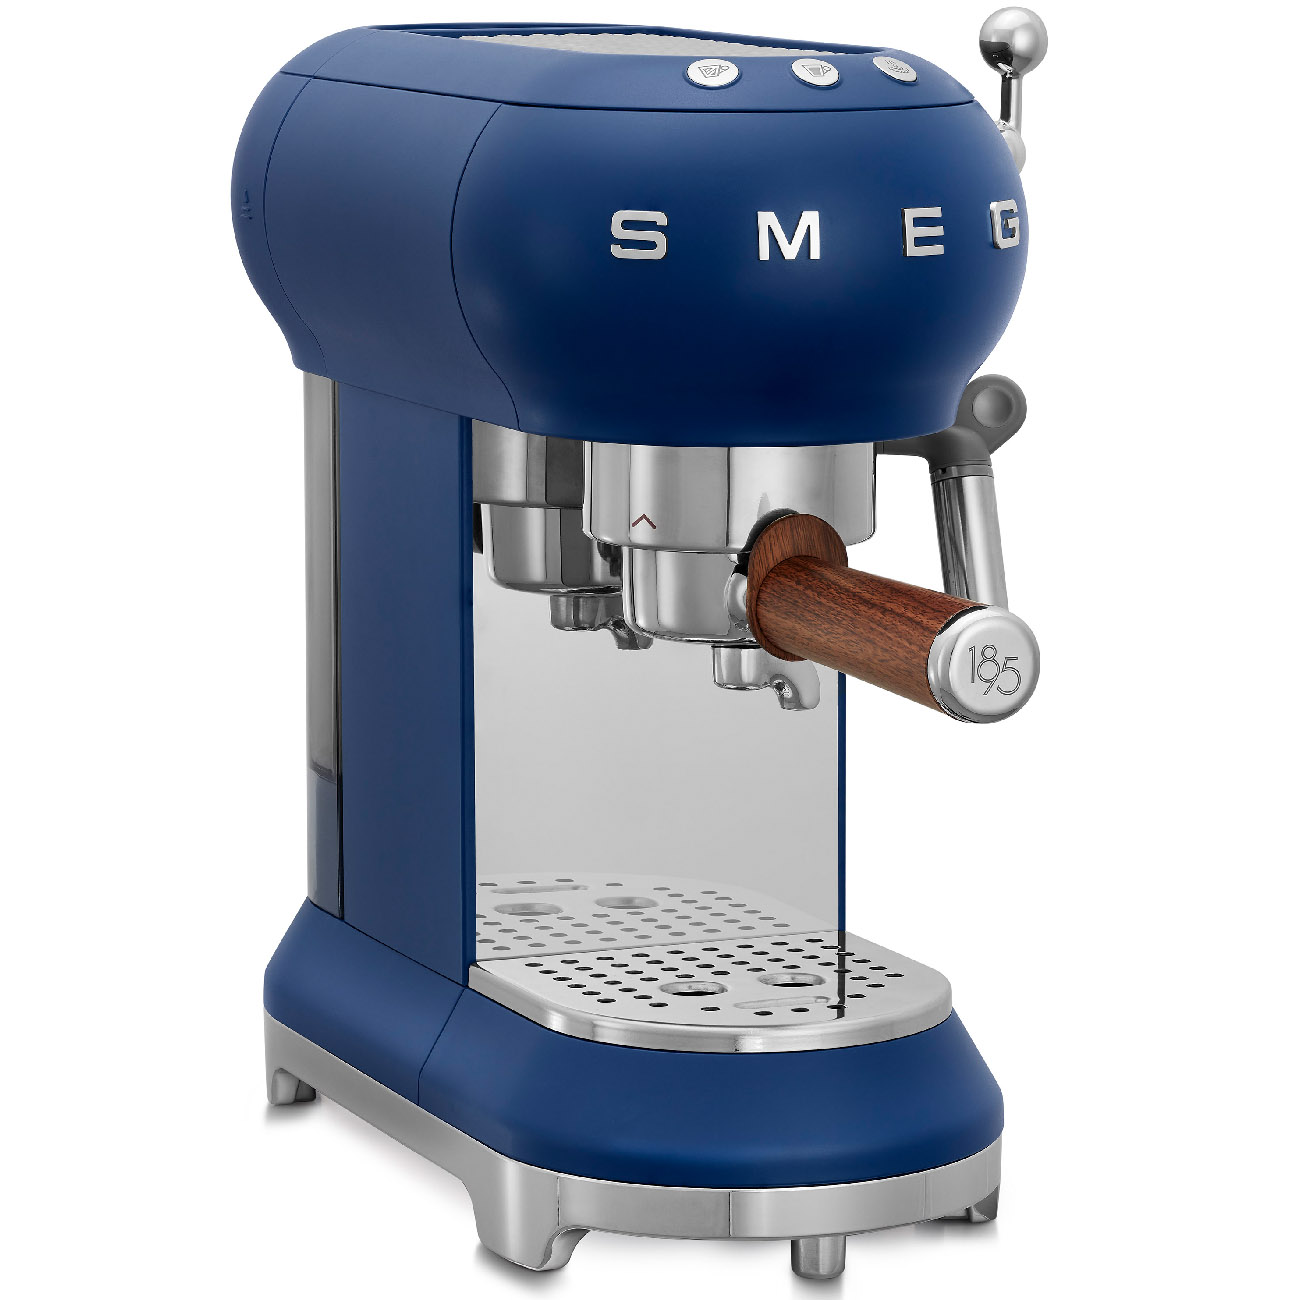 Macchina da caffè espresso Blu - Lavazza 1895 Smeg_5